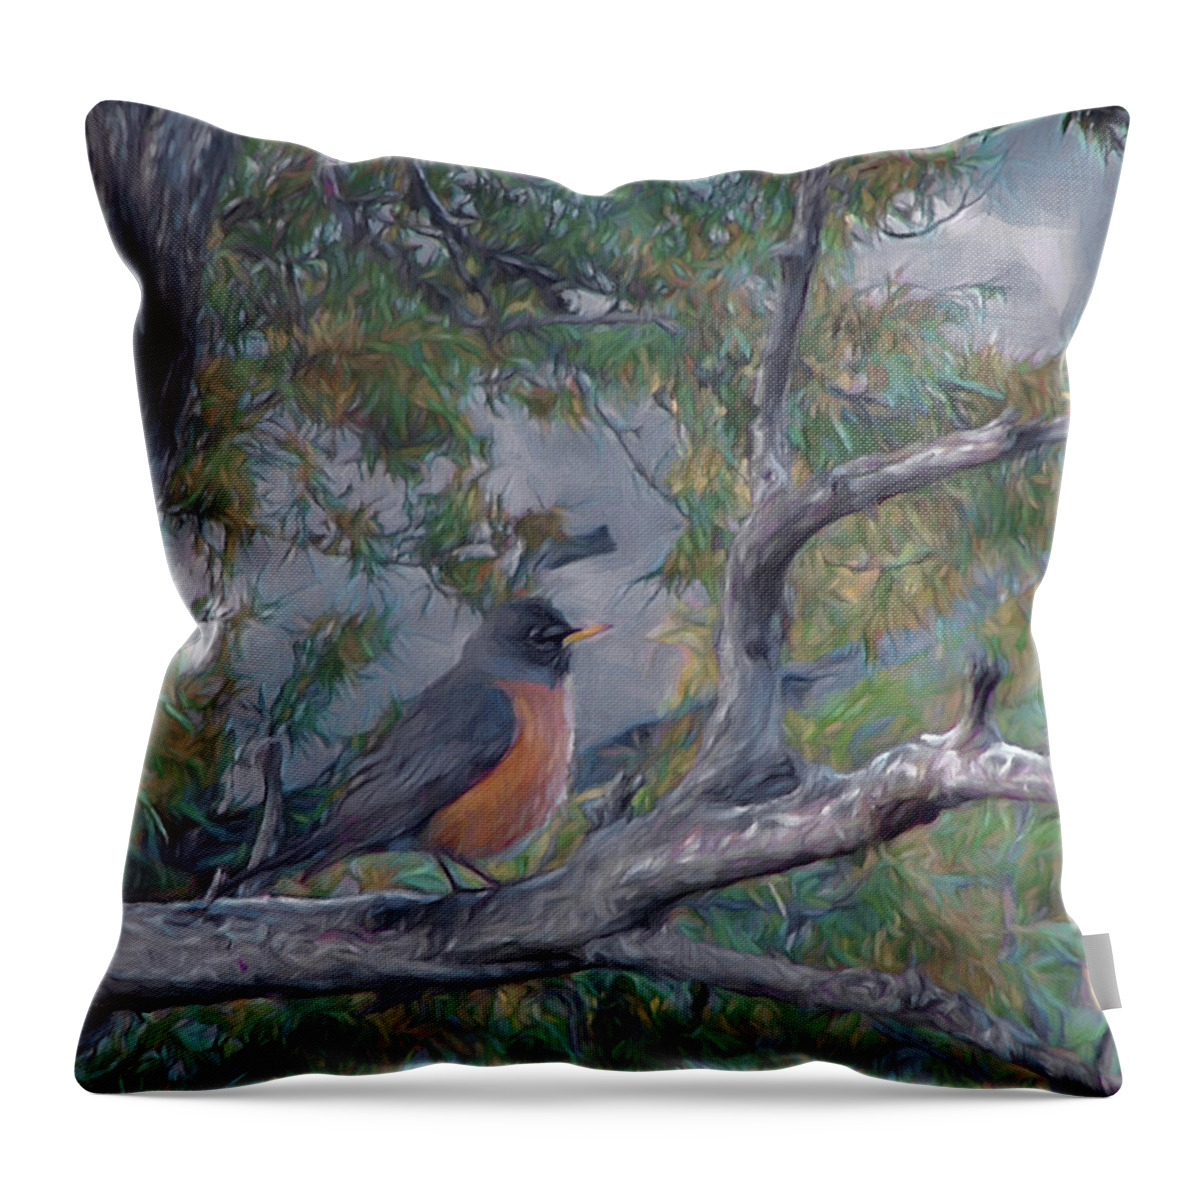 Animals Throw Pillow featuring the digital art Spring Morning Robin DA by Ernest Echols